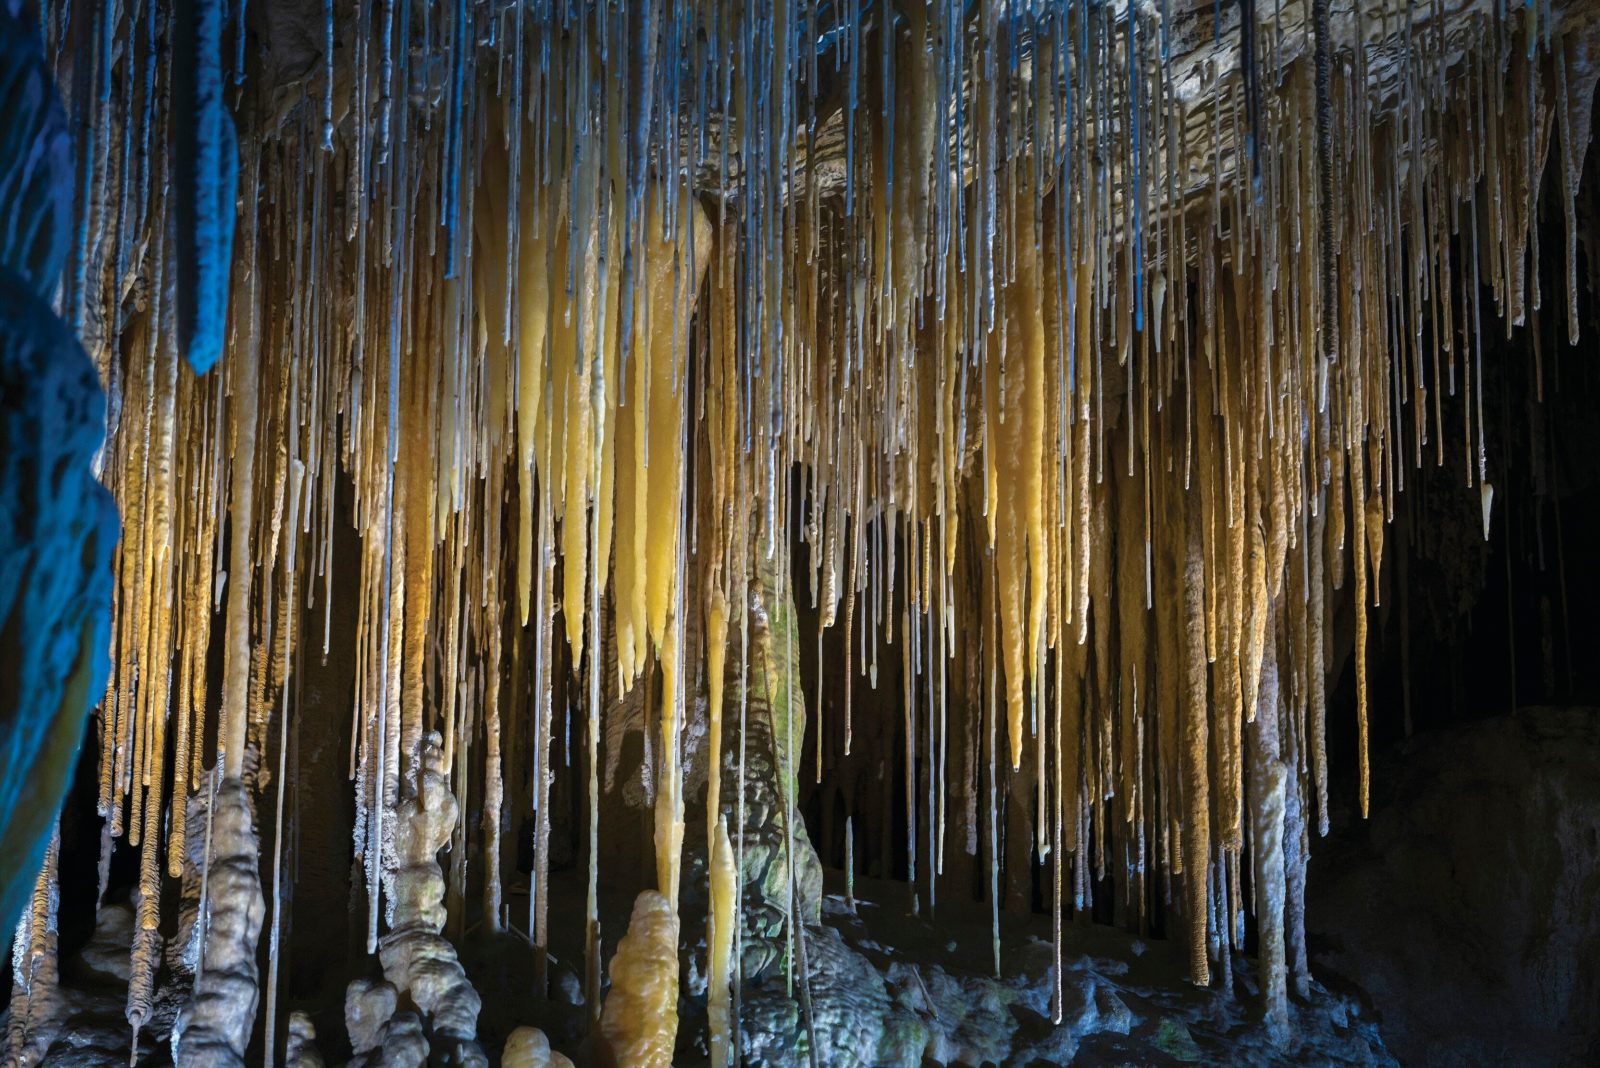 Hastings Cave